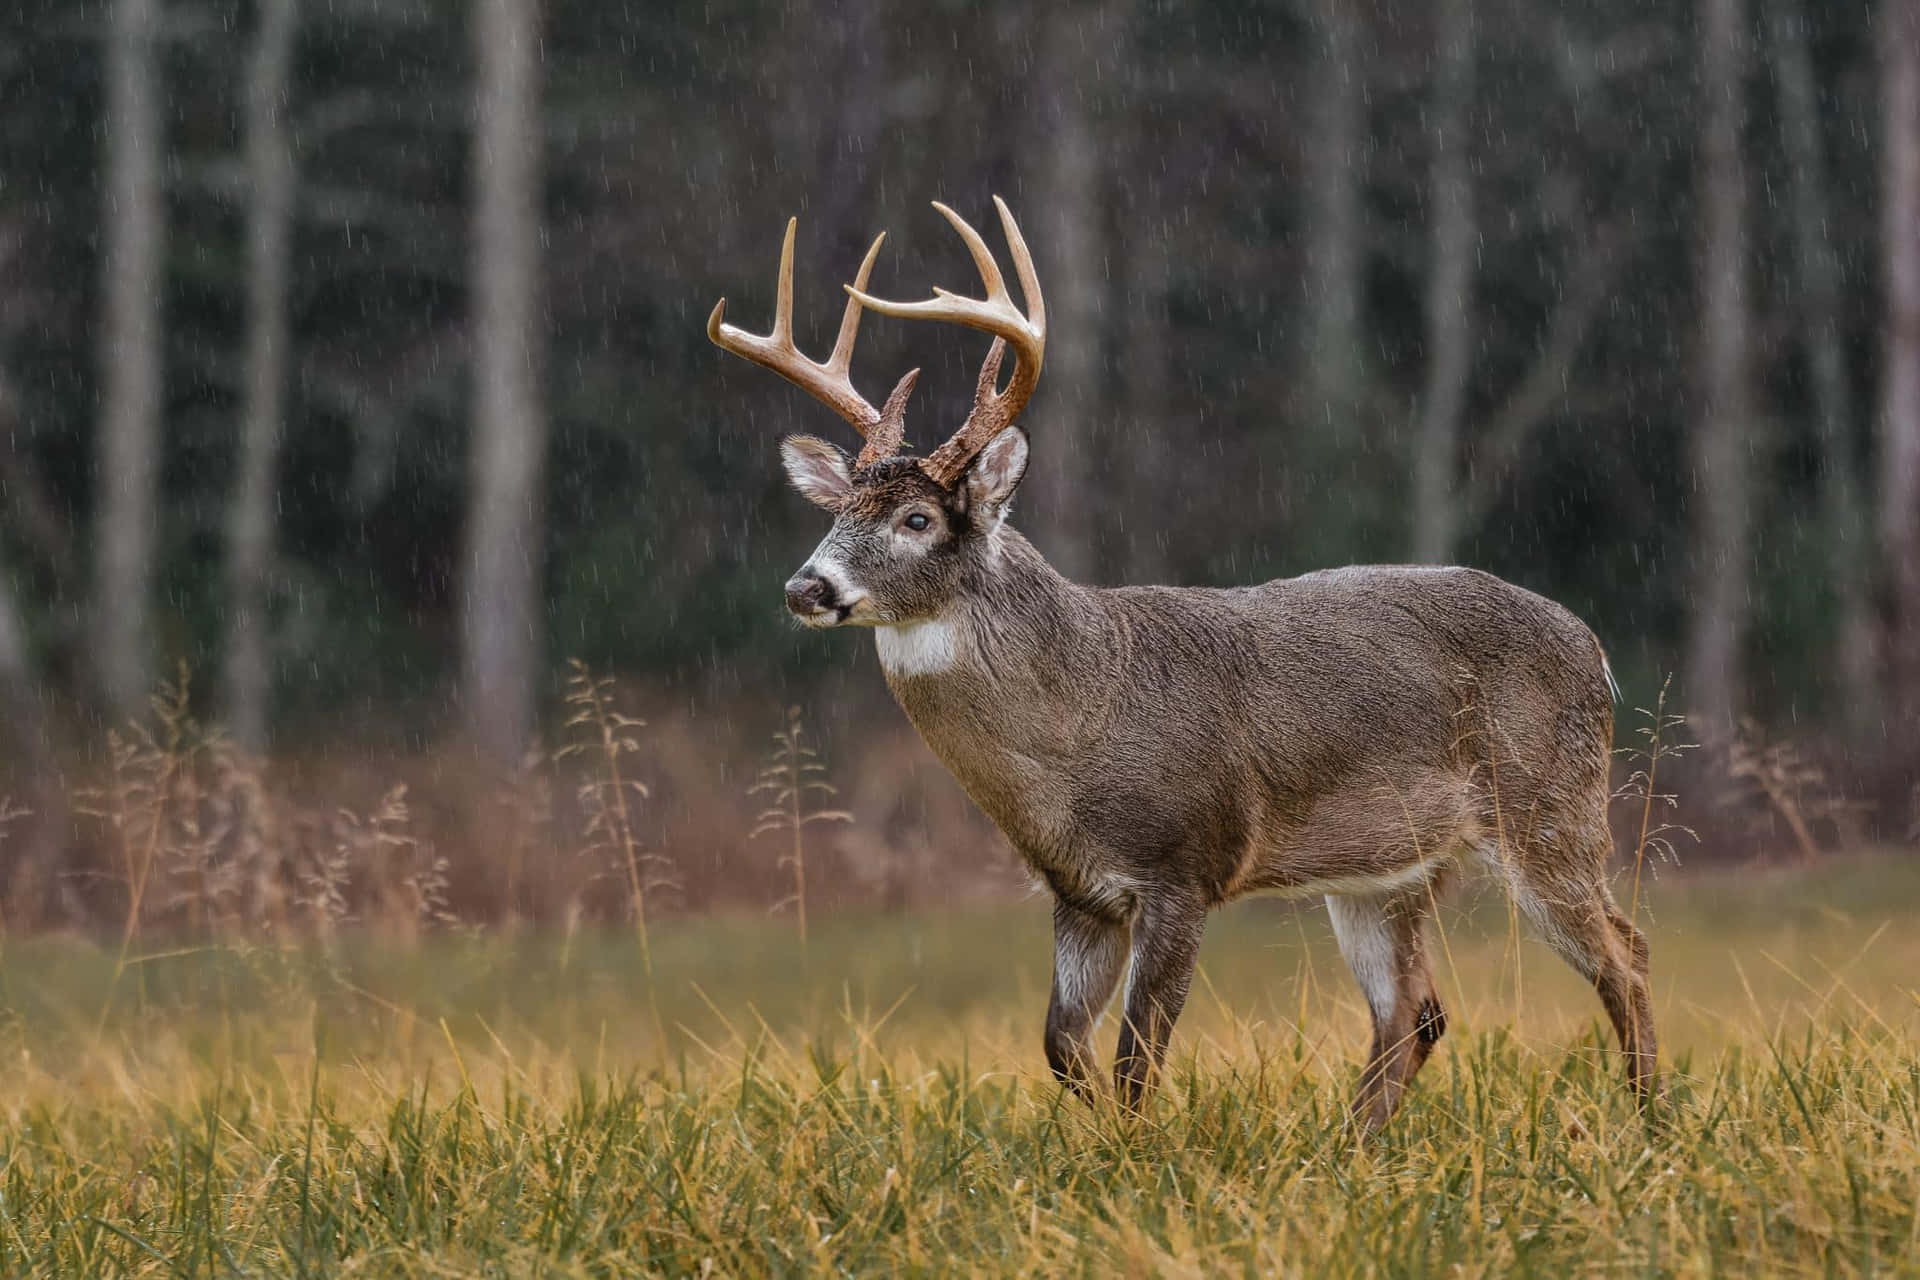 a deer standing in a field in the rain